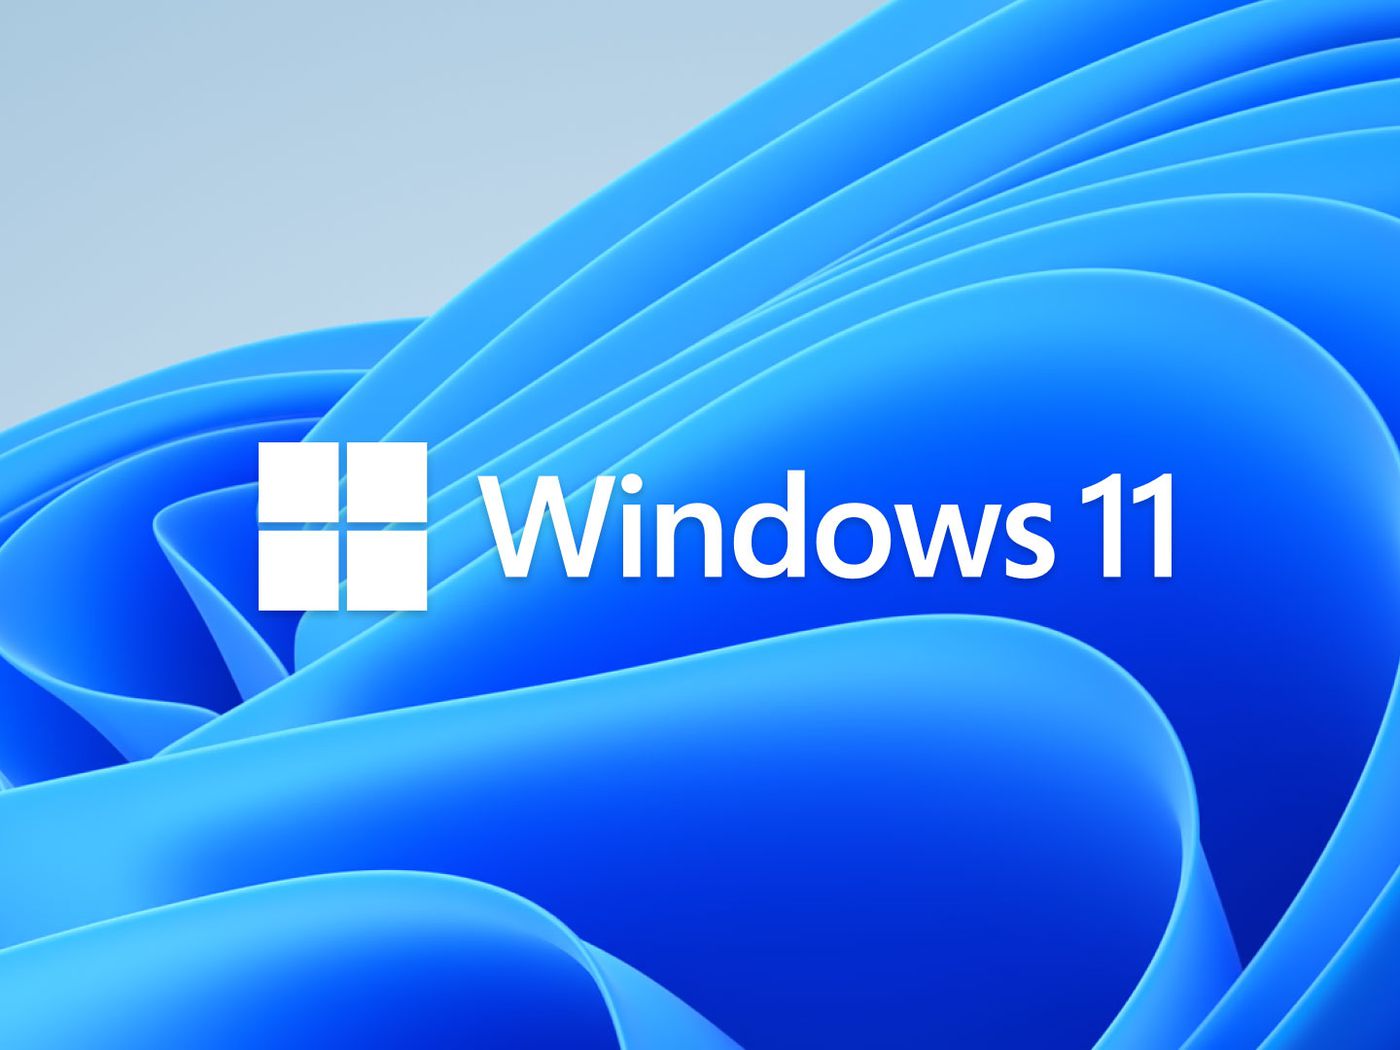 Windows 11 plus Logo, over blue wave background